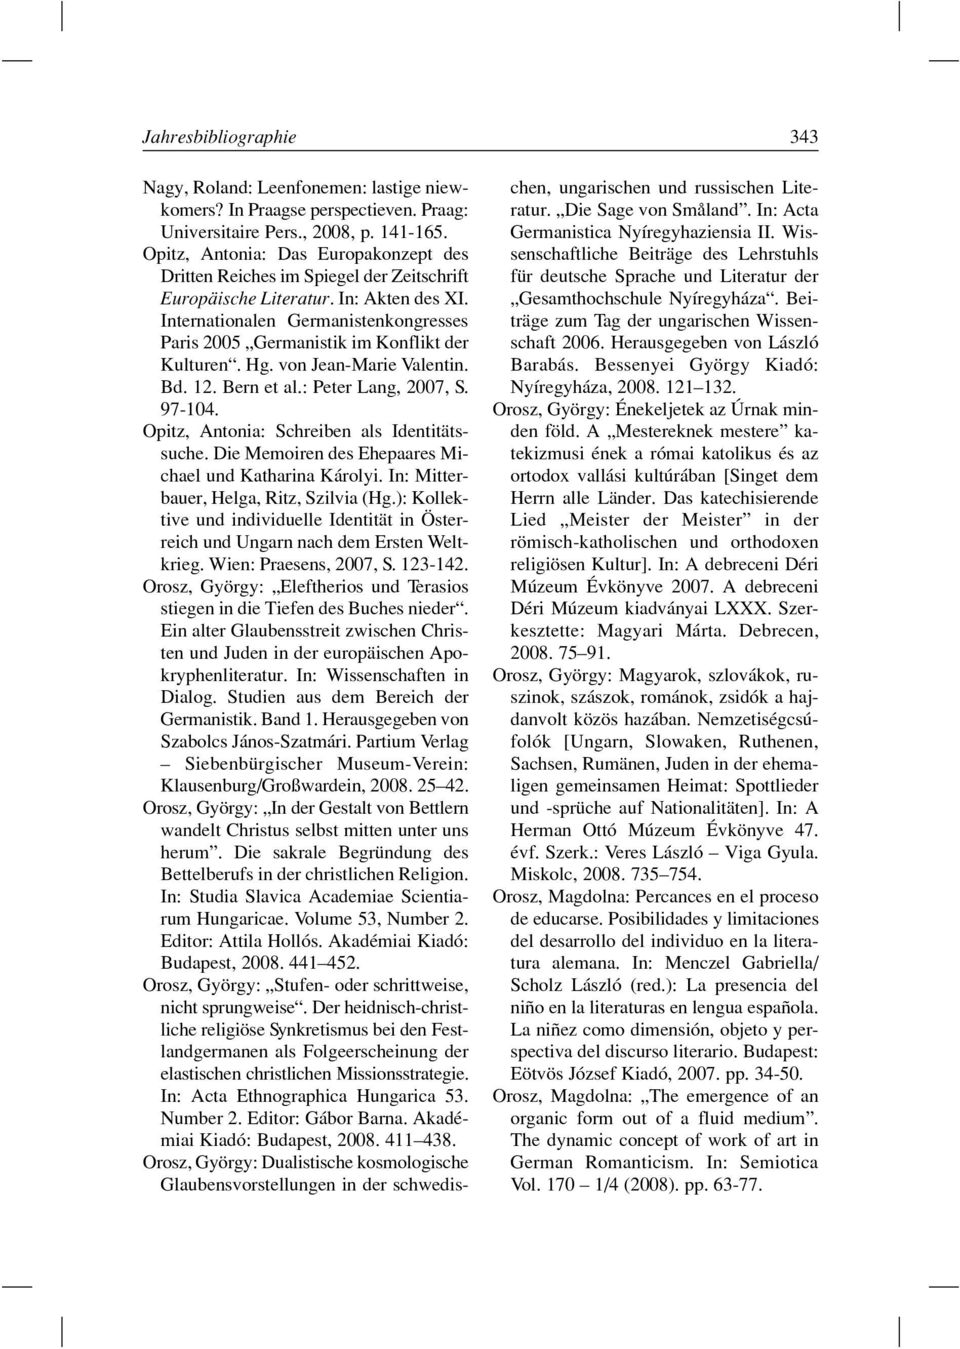 Internationalen Germanistenkongresses Paris 2005 Germanistik im Konflikt der Kulturen. Hg. von Jean-Marie Valentin. Bd. 12. Bern et al.: Peter Lang, 2007, S. 97-104.